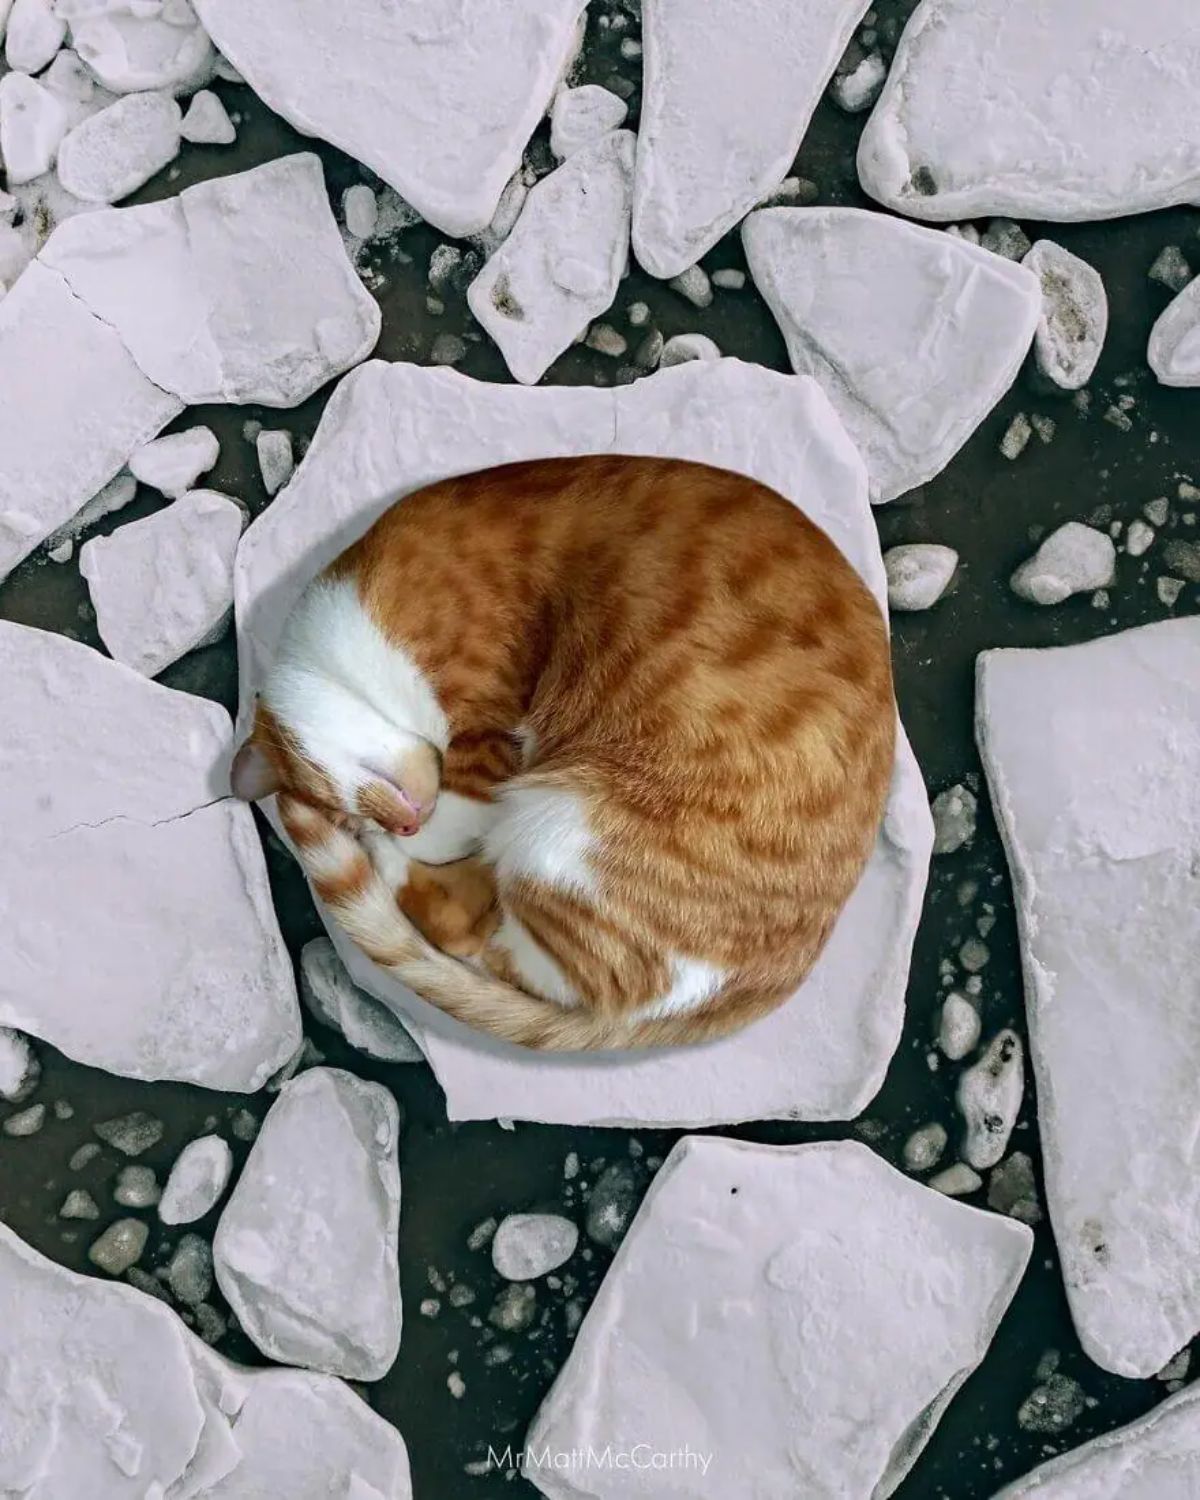 large photoshopped orange and white cat sleeping curled up on ice surrounded by more ice